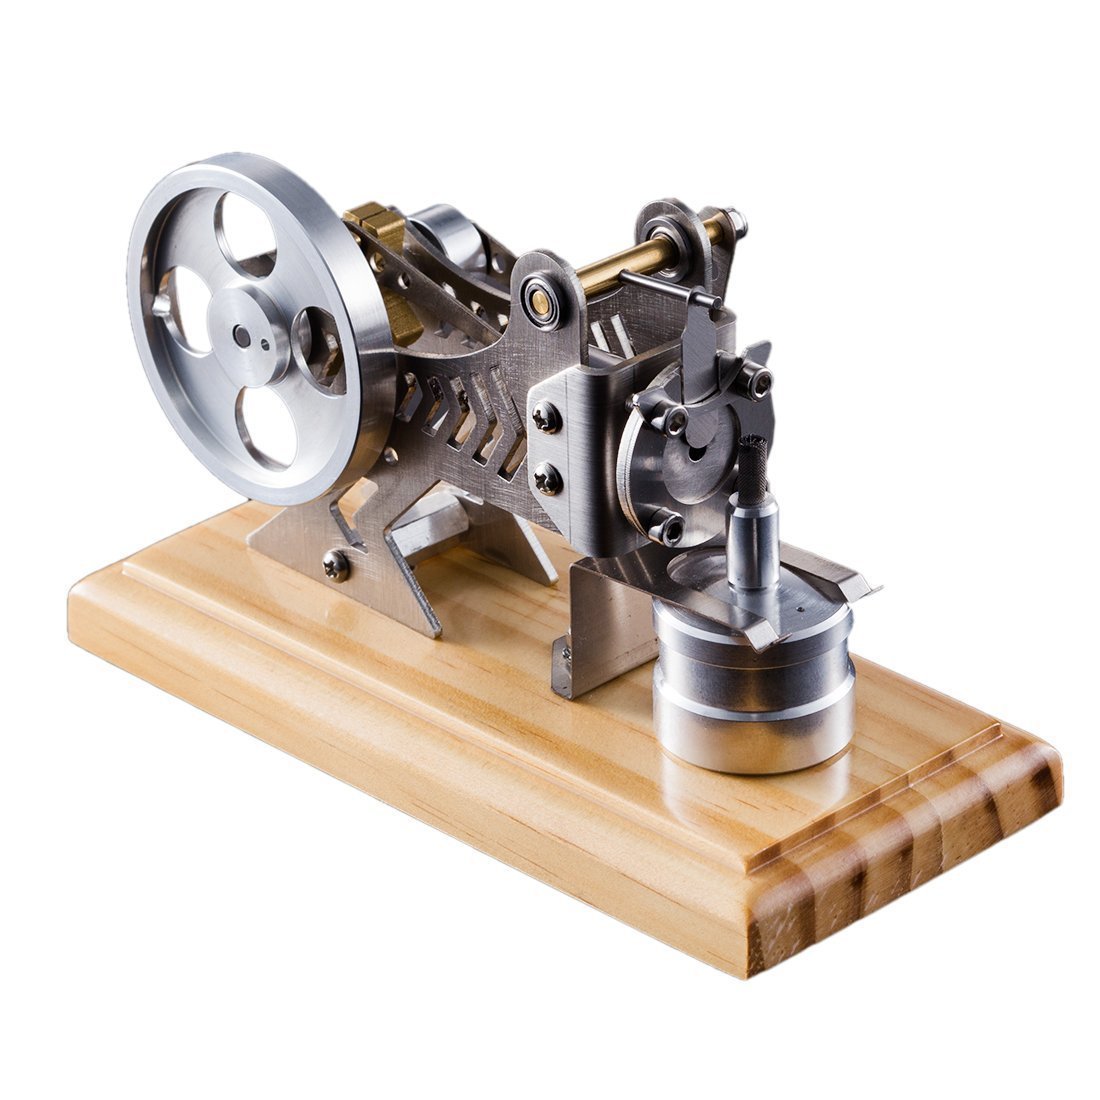 Enginediy Vacuum Engine Flame Eater Flame Licker Stirling Engine